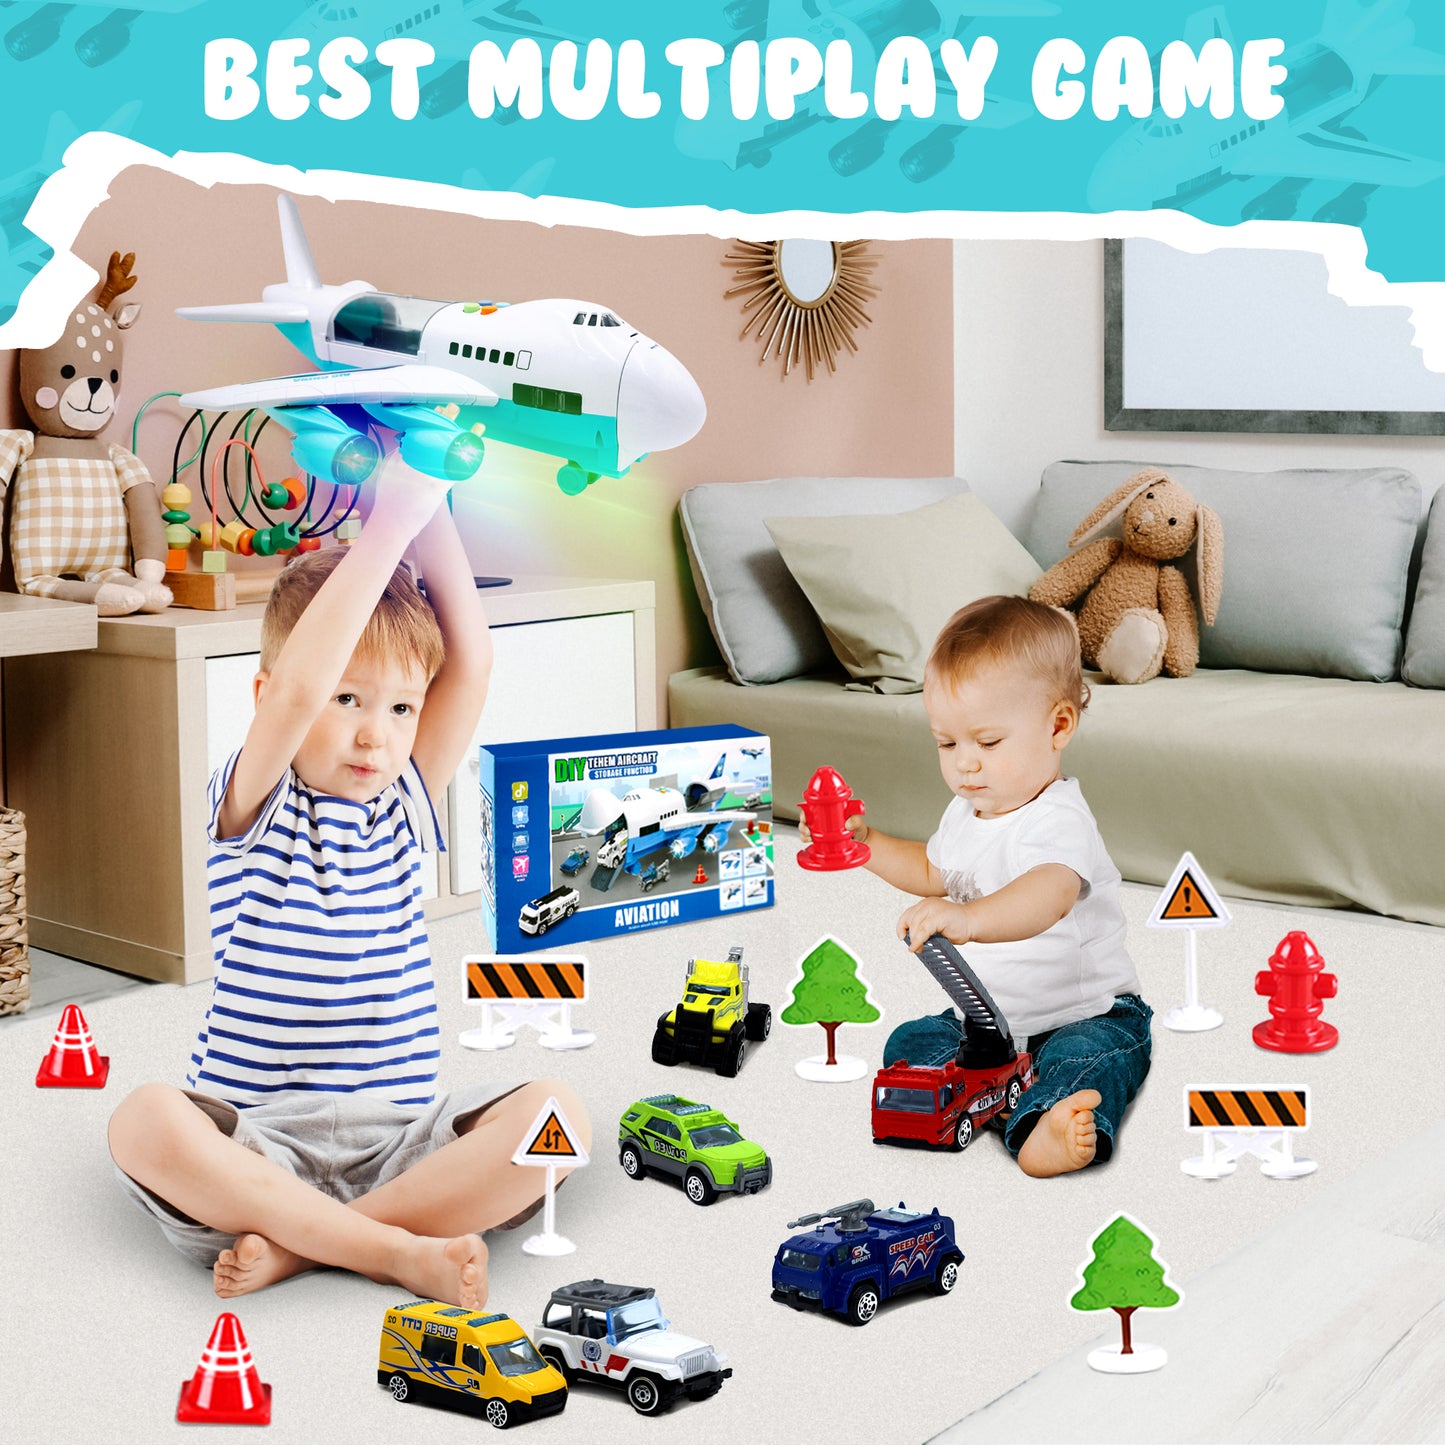 Child imagining flight adventures with JoyX airplane toy set